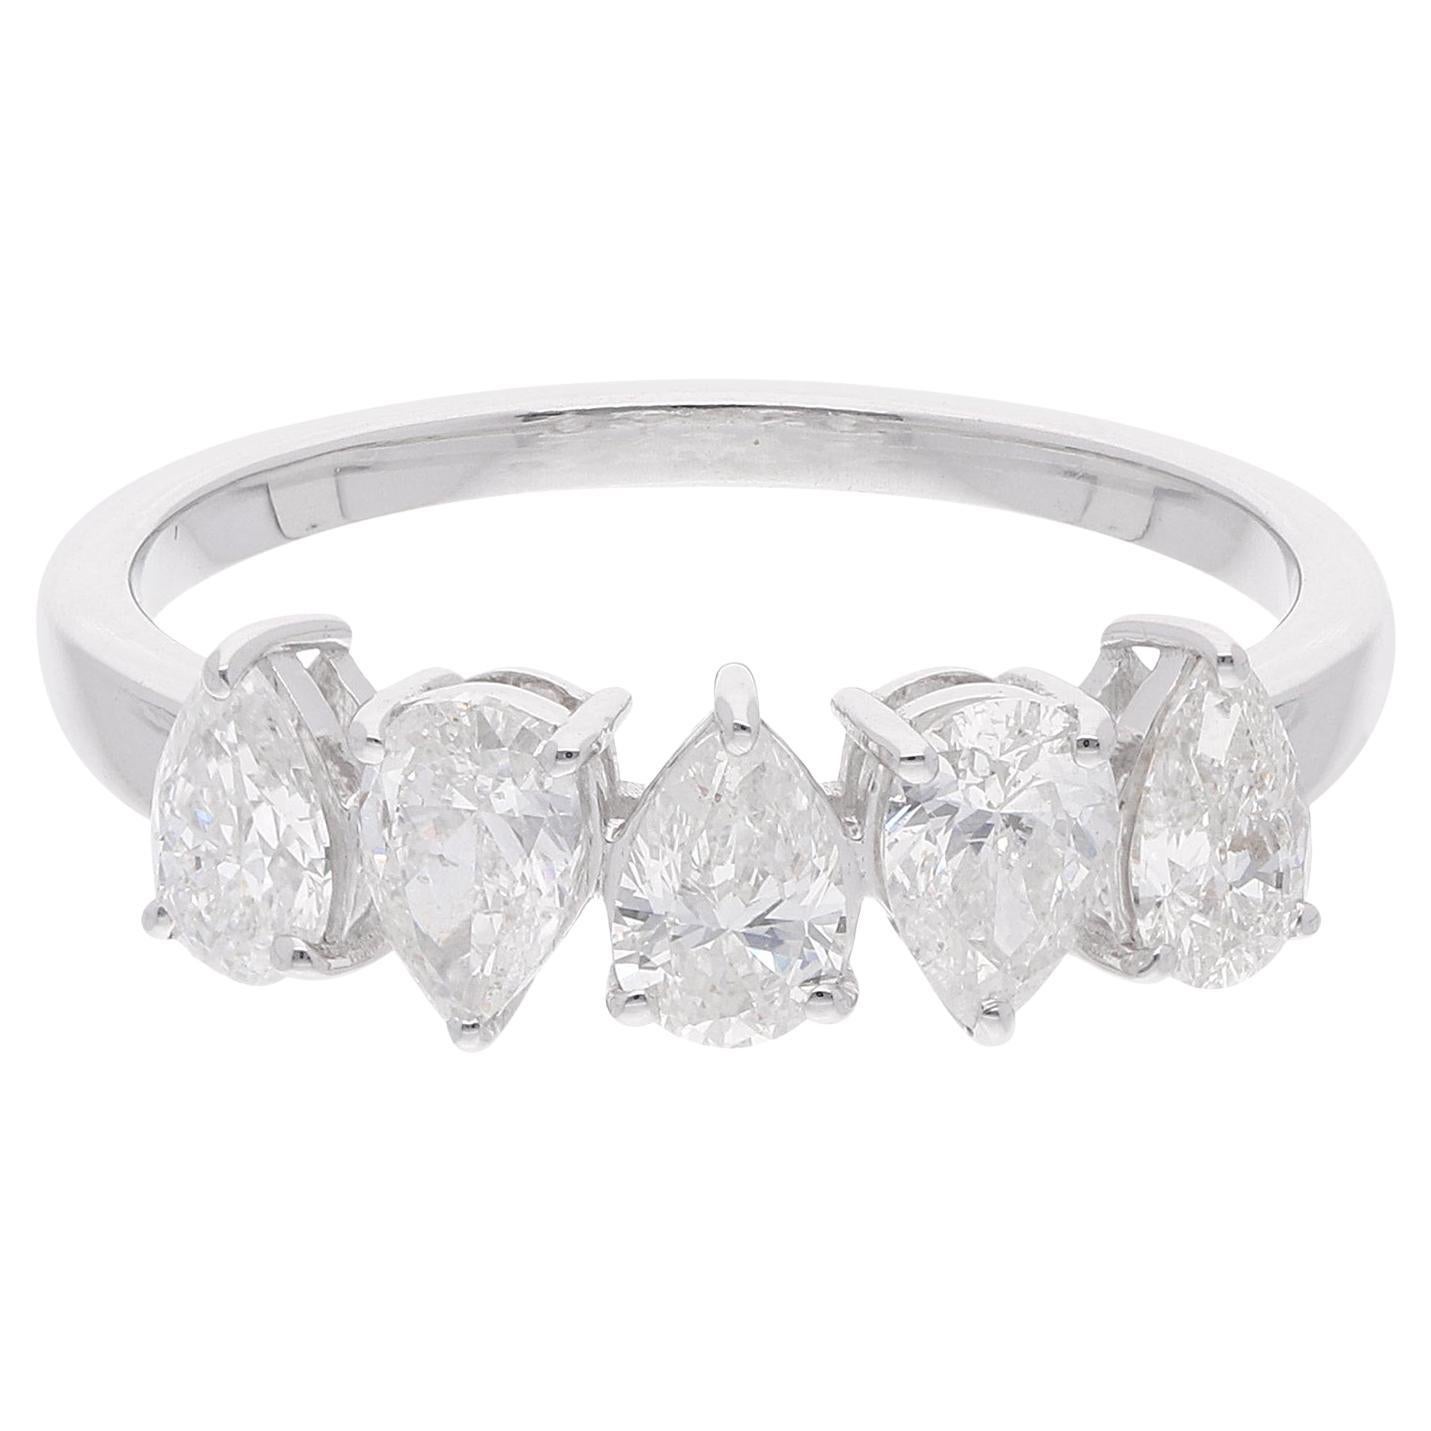 1.20 Carat SI Clarity HI Color Pear Shape Diamond Band Ring 18 Karat White Gold